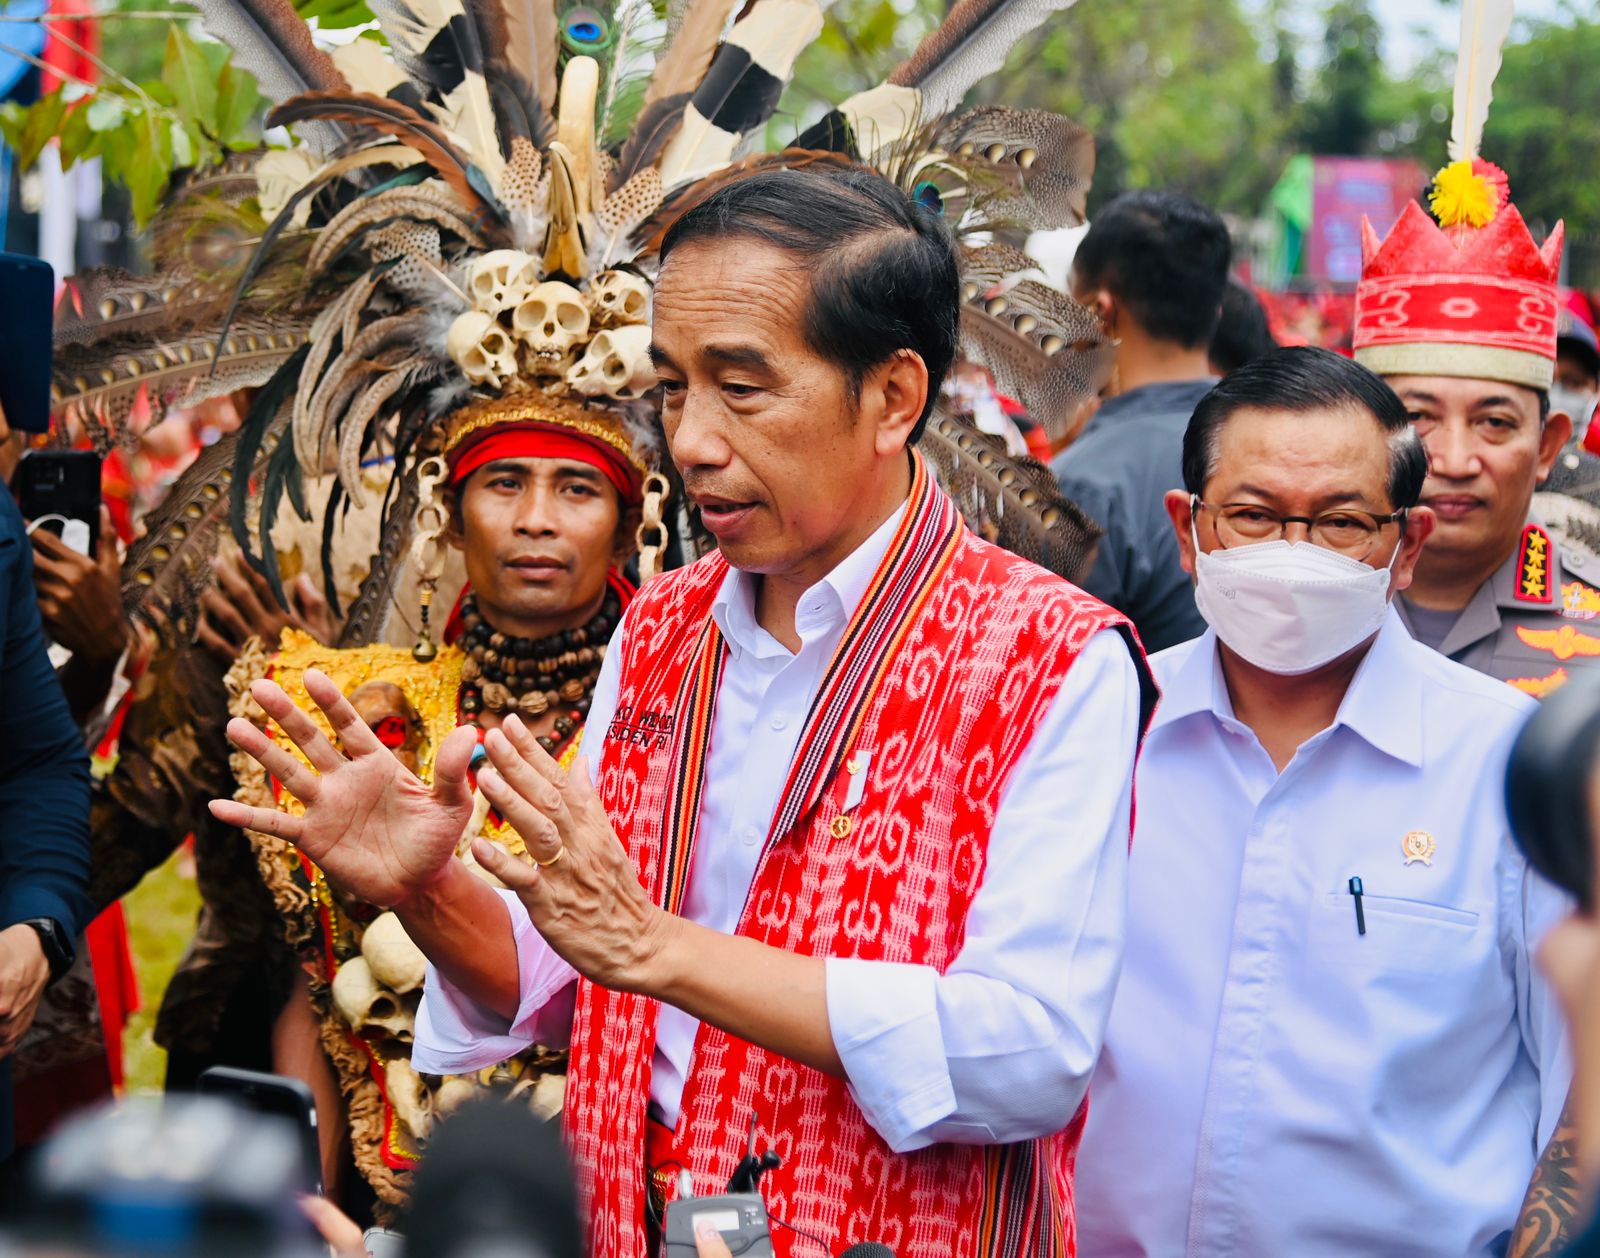 Presiden Jokowi Sampaikan Progres Pembangunan IKN